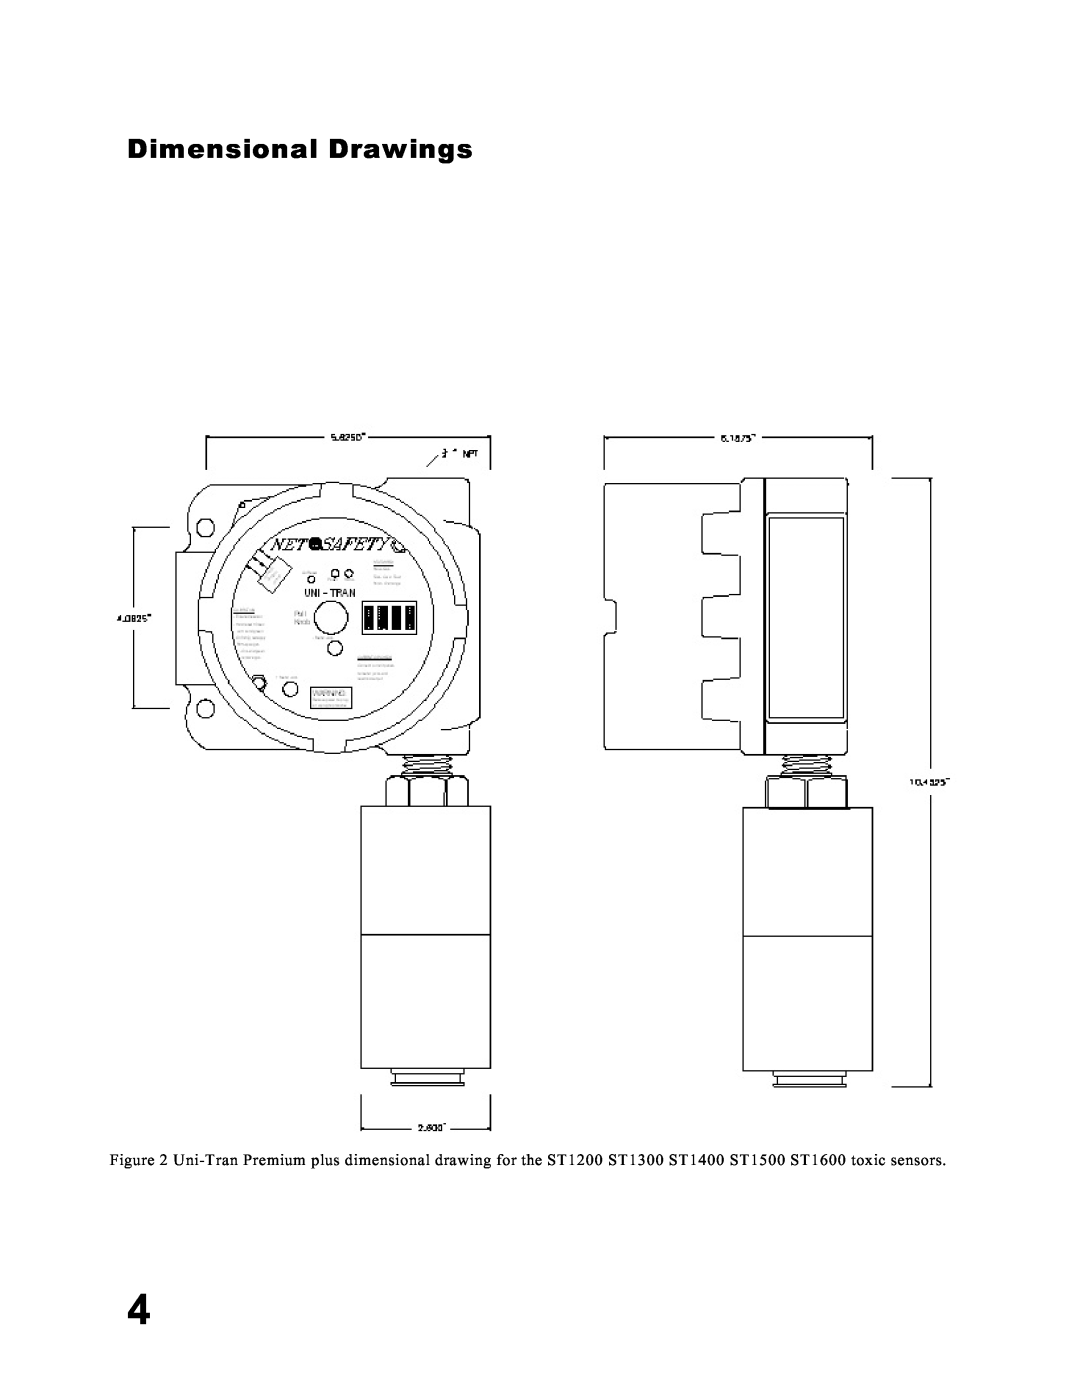 Emerson UT-P+-STXXXX, MA N-00 05-00 user manual Dimensional Drawings 